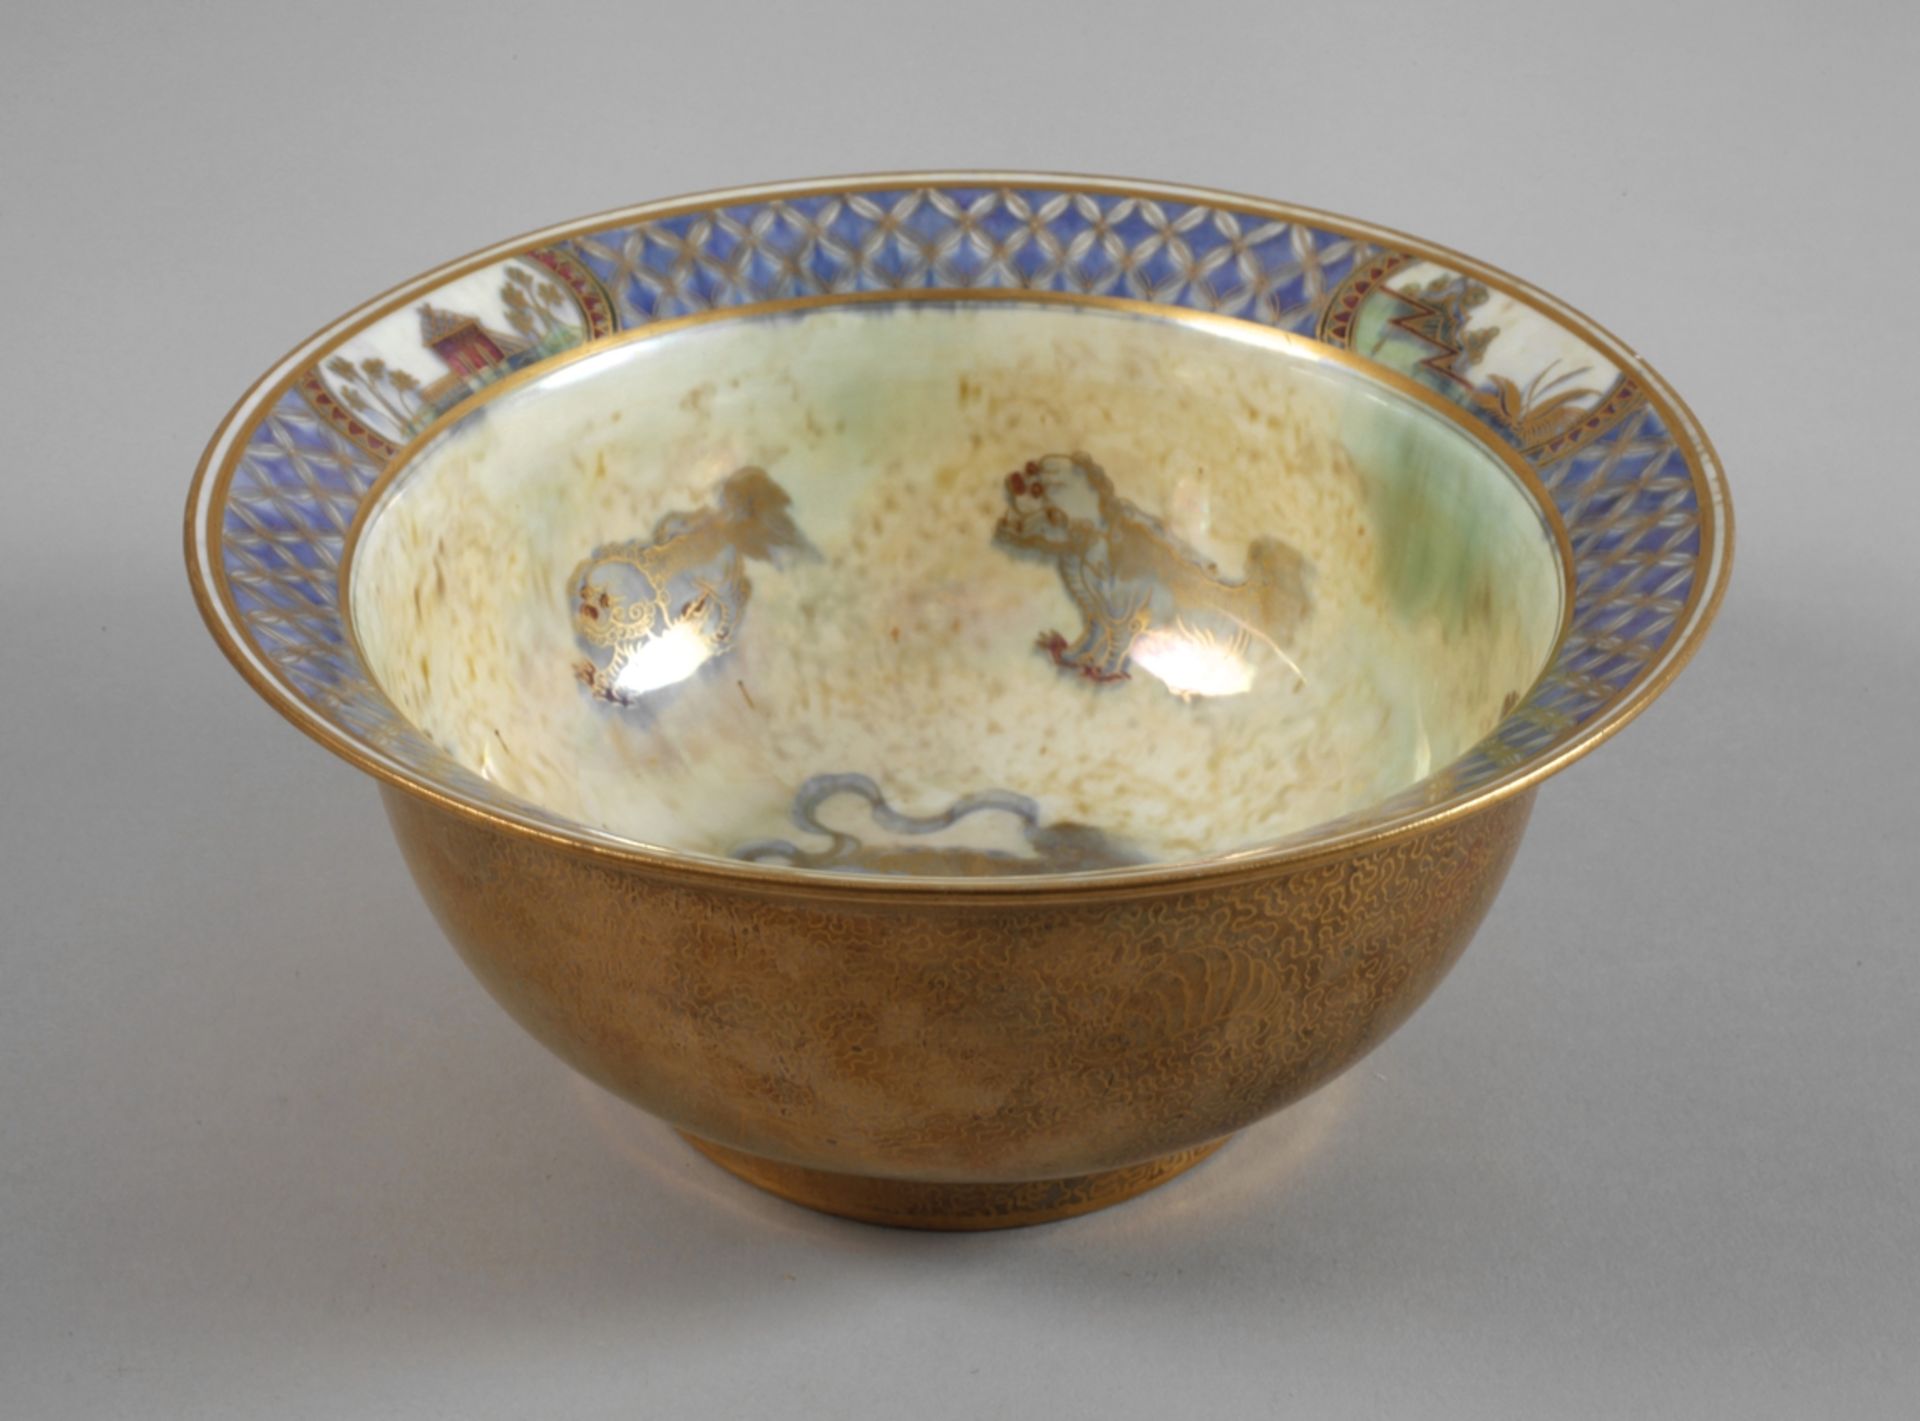 Bowl with lustre glaze